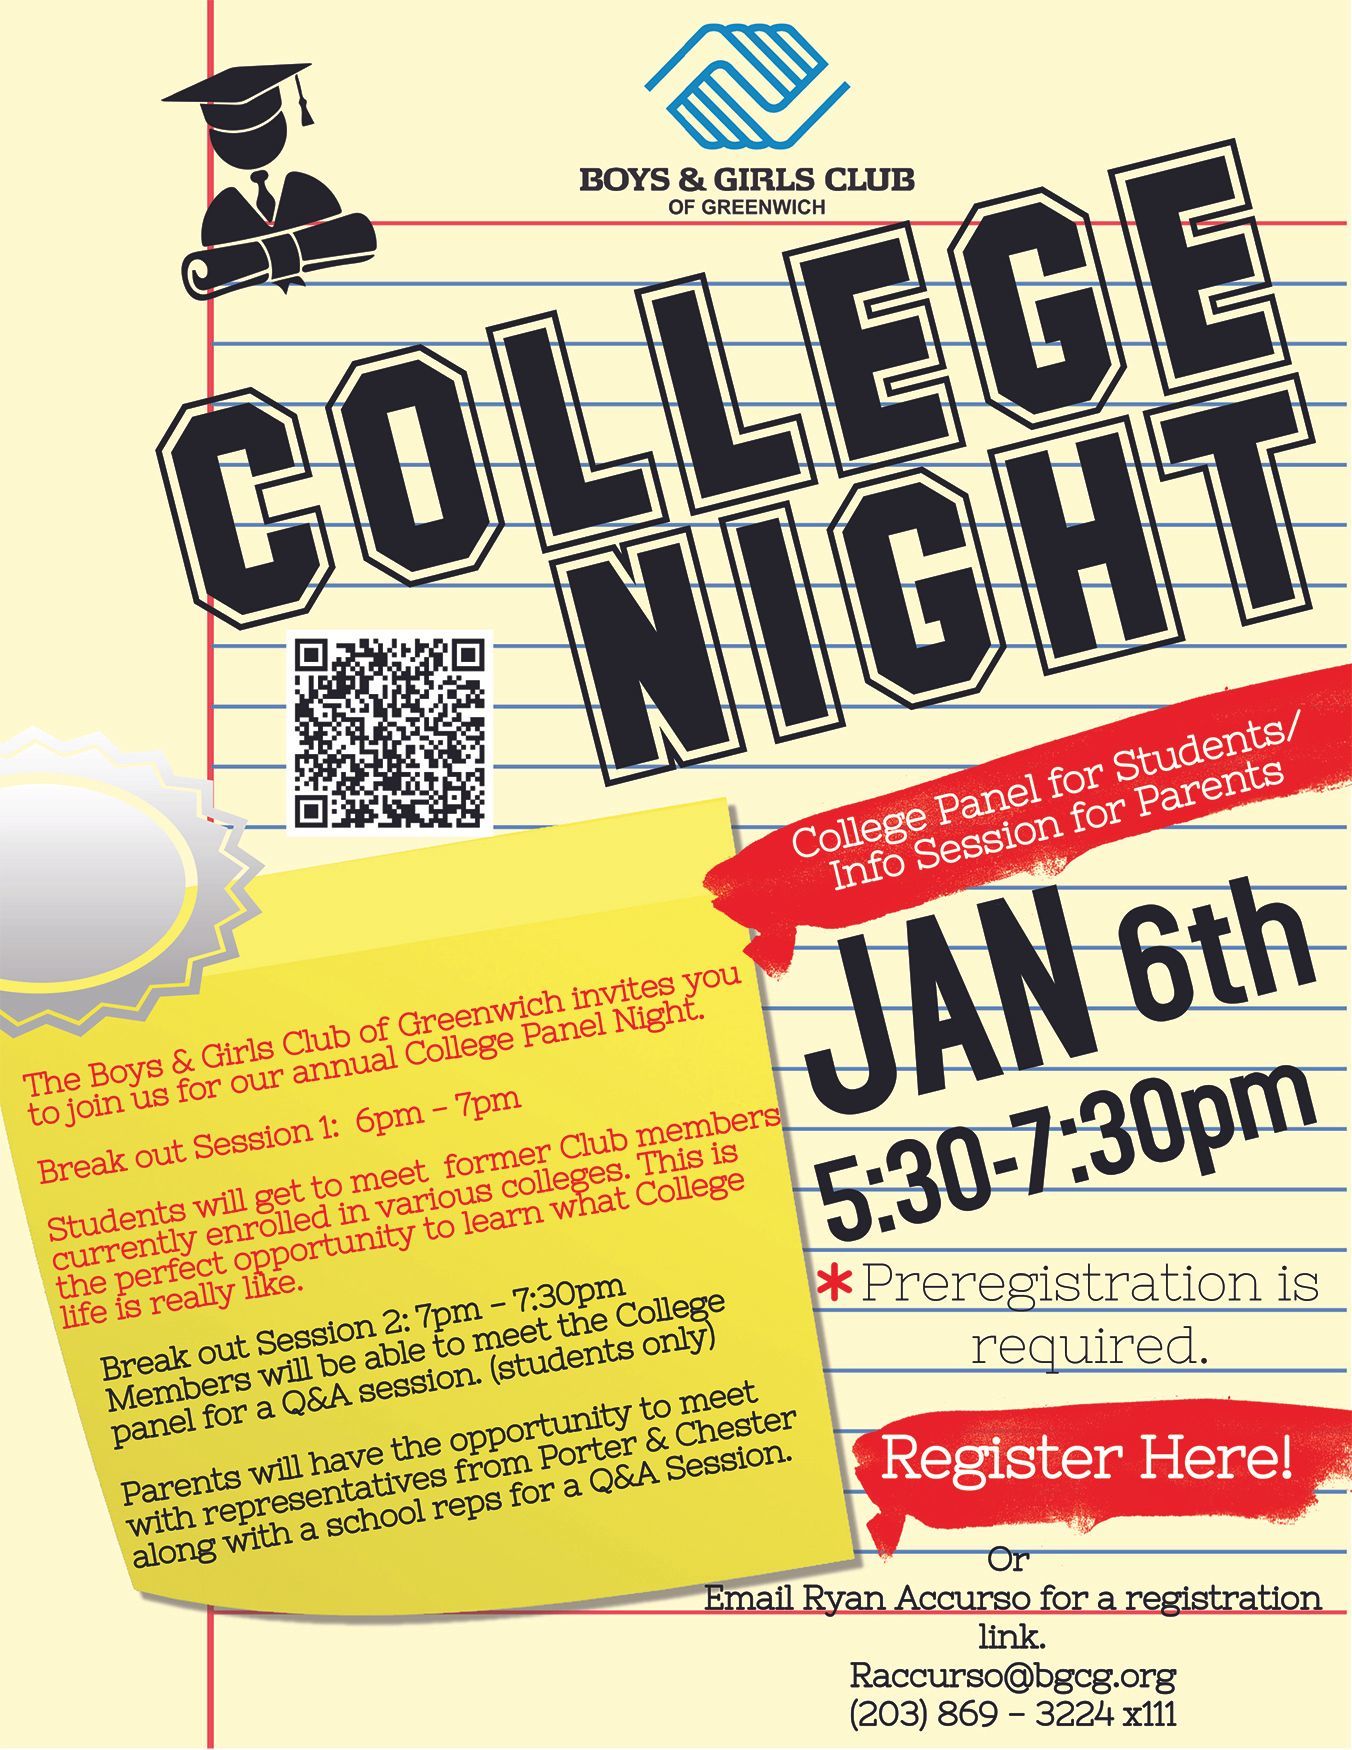 College Panel Night - January 6